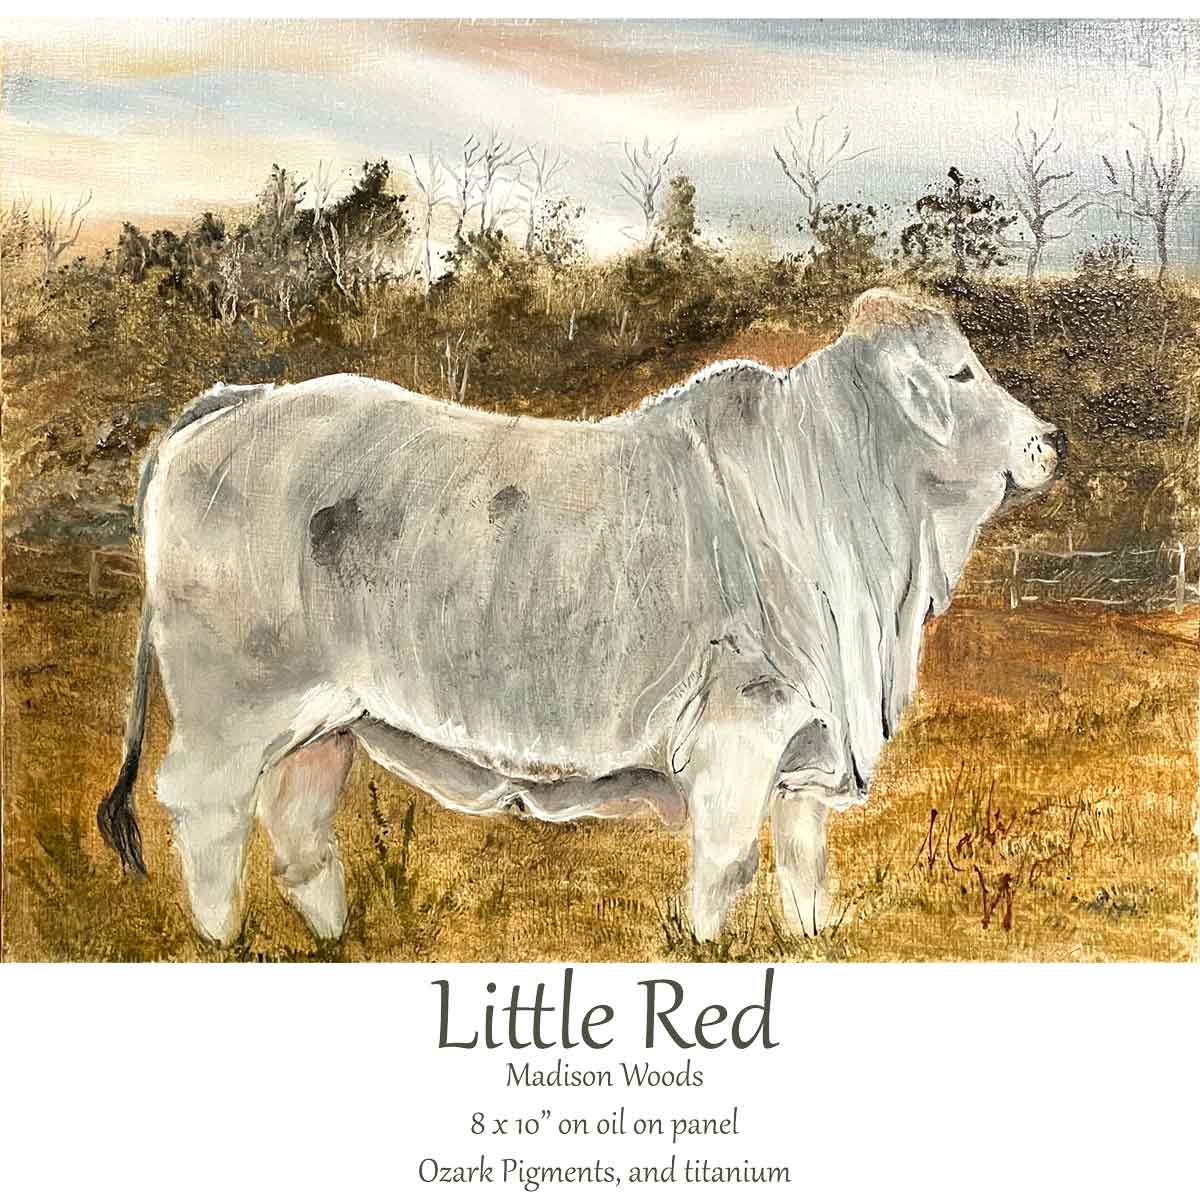 Little Red, a Brahman heifer in Ozark oil pigments. A painting in my Brahman cow art series.